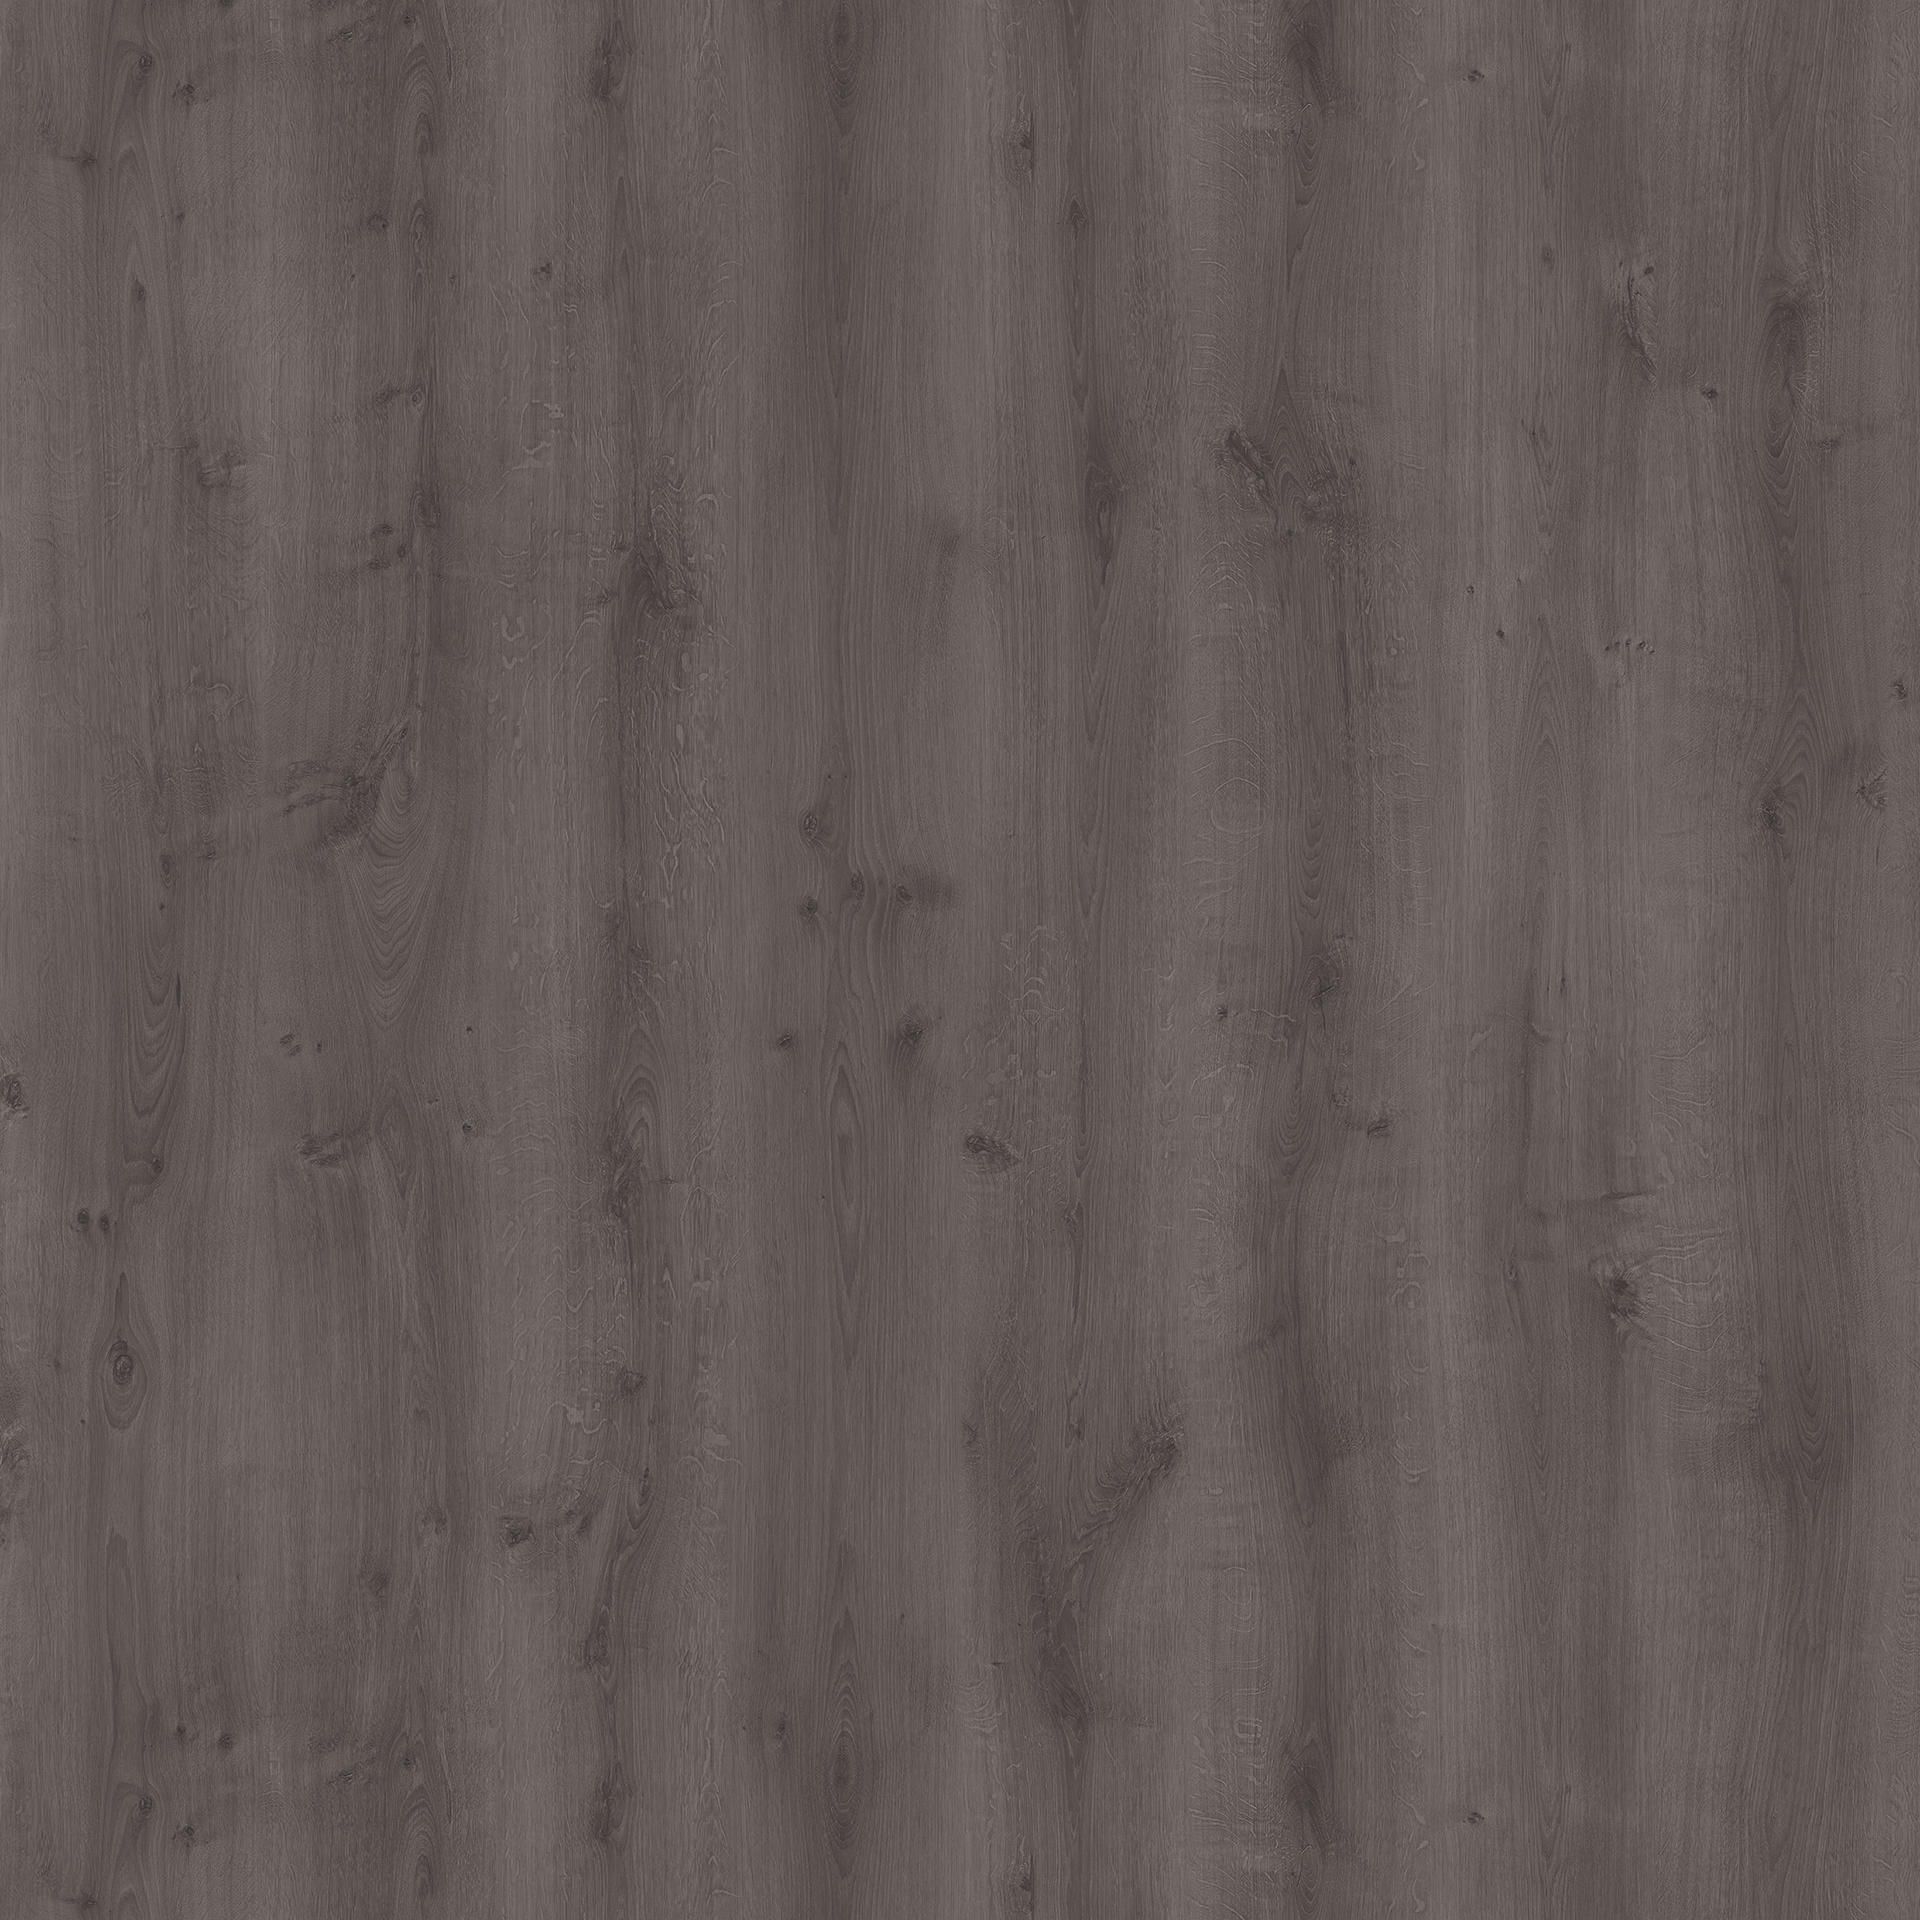 Designboden Rustic Oak BASALT Planke 122 cm x 12,5 cm - Nutzschichtdicke 0,55 mm